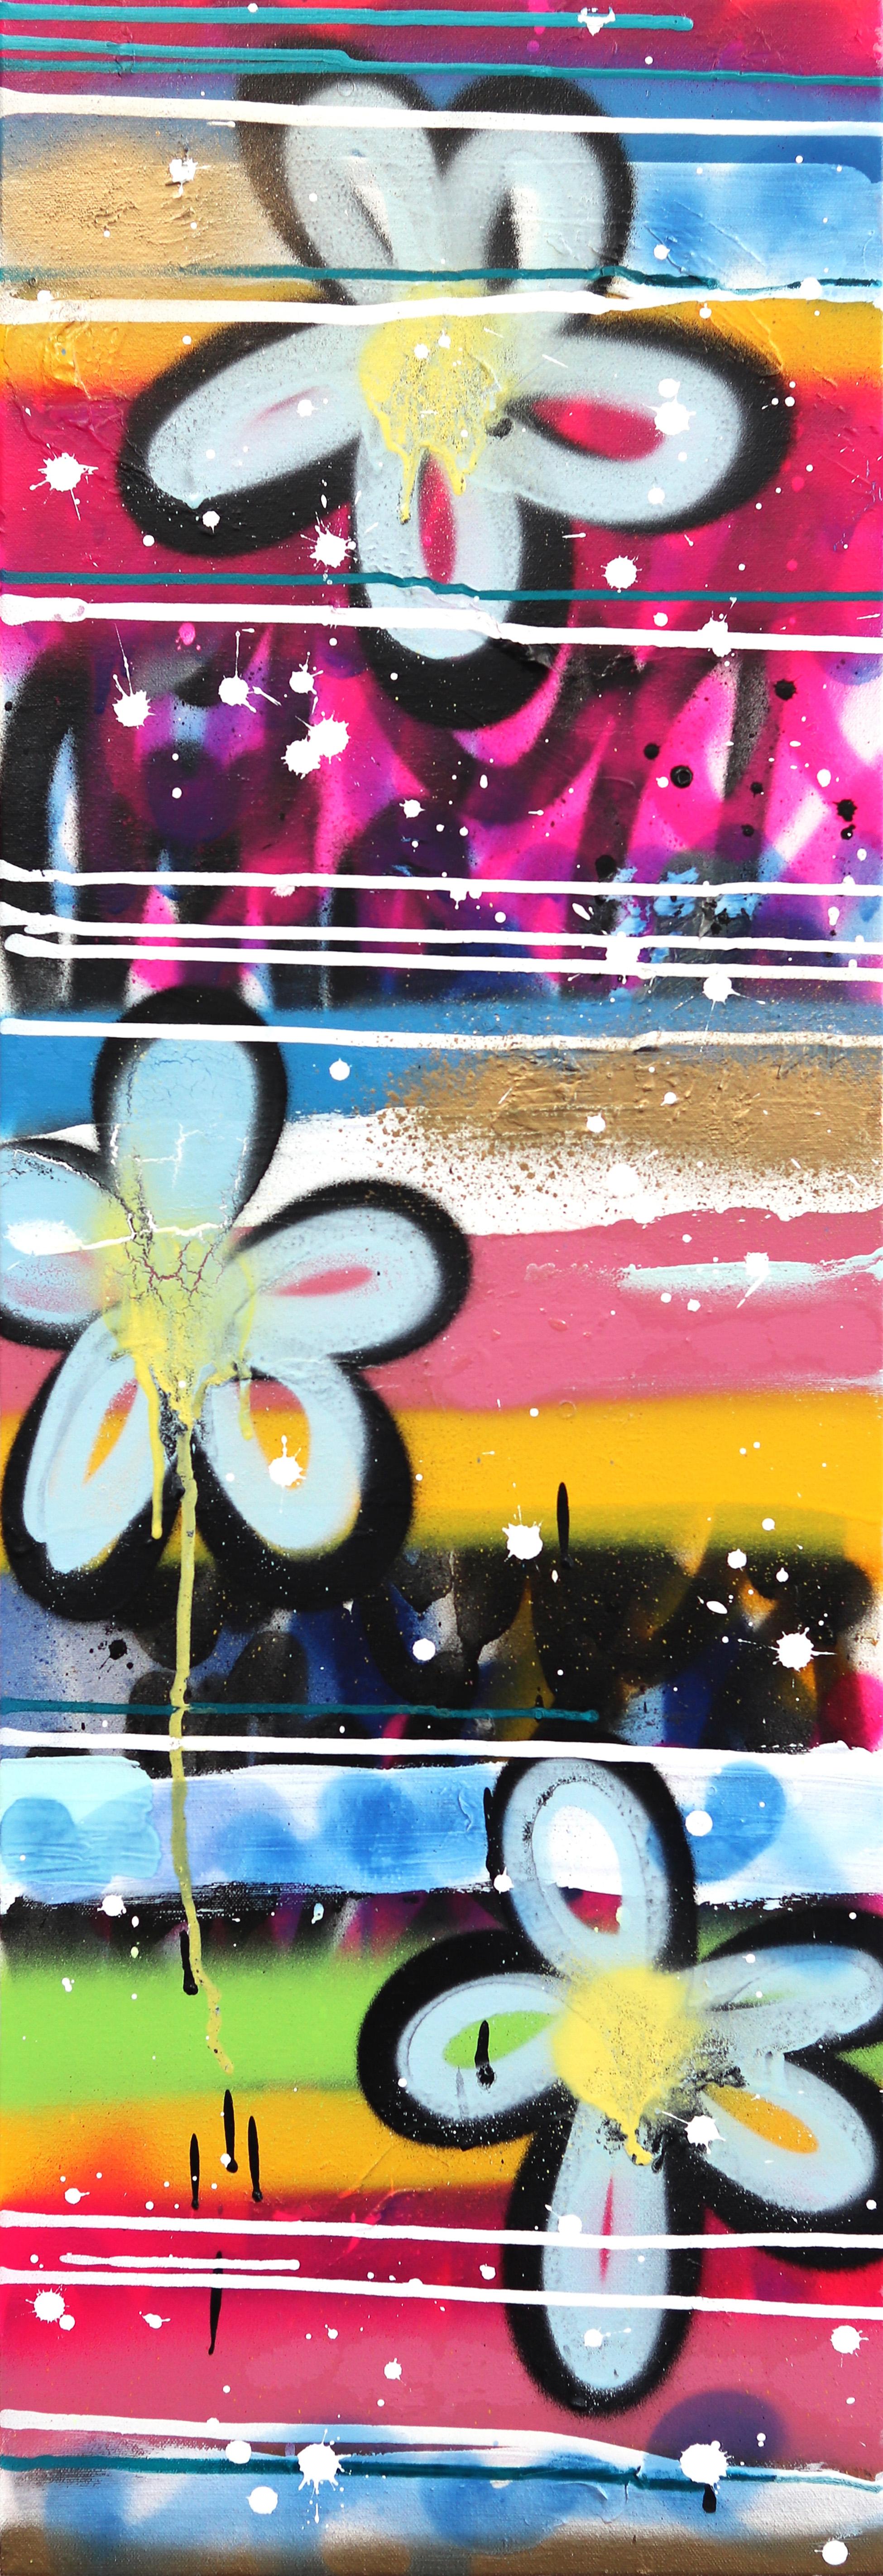 Abstract Painting Amber Goldhammer - Favori Sunrise Walk - Original Colorful Urban Love Pop Street Art